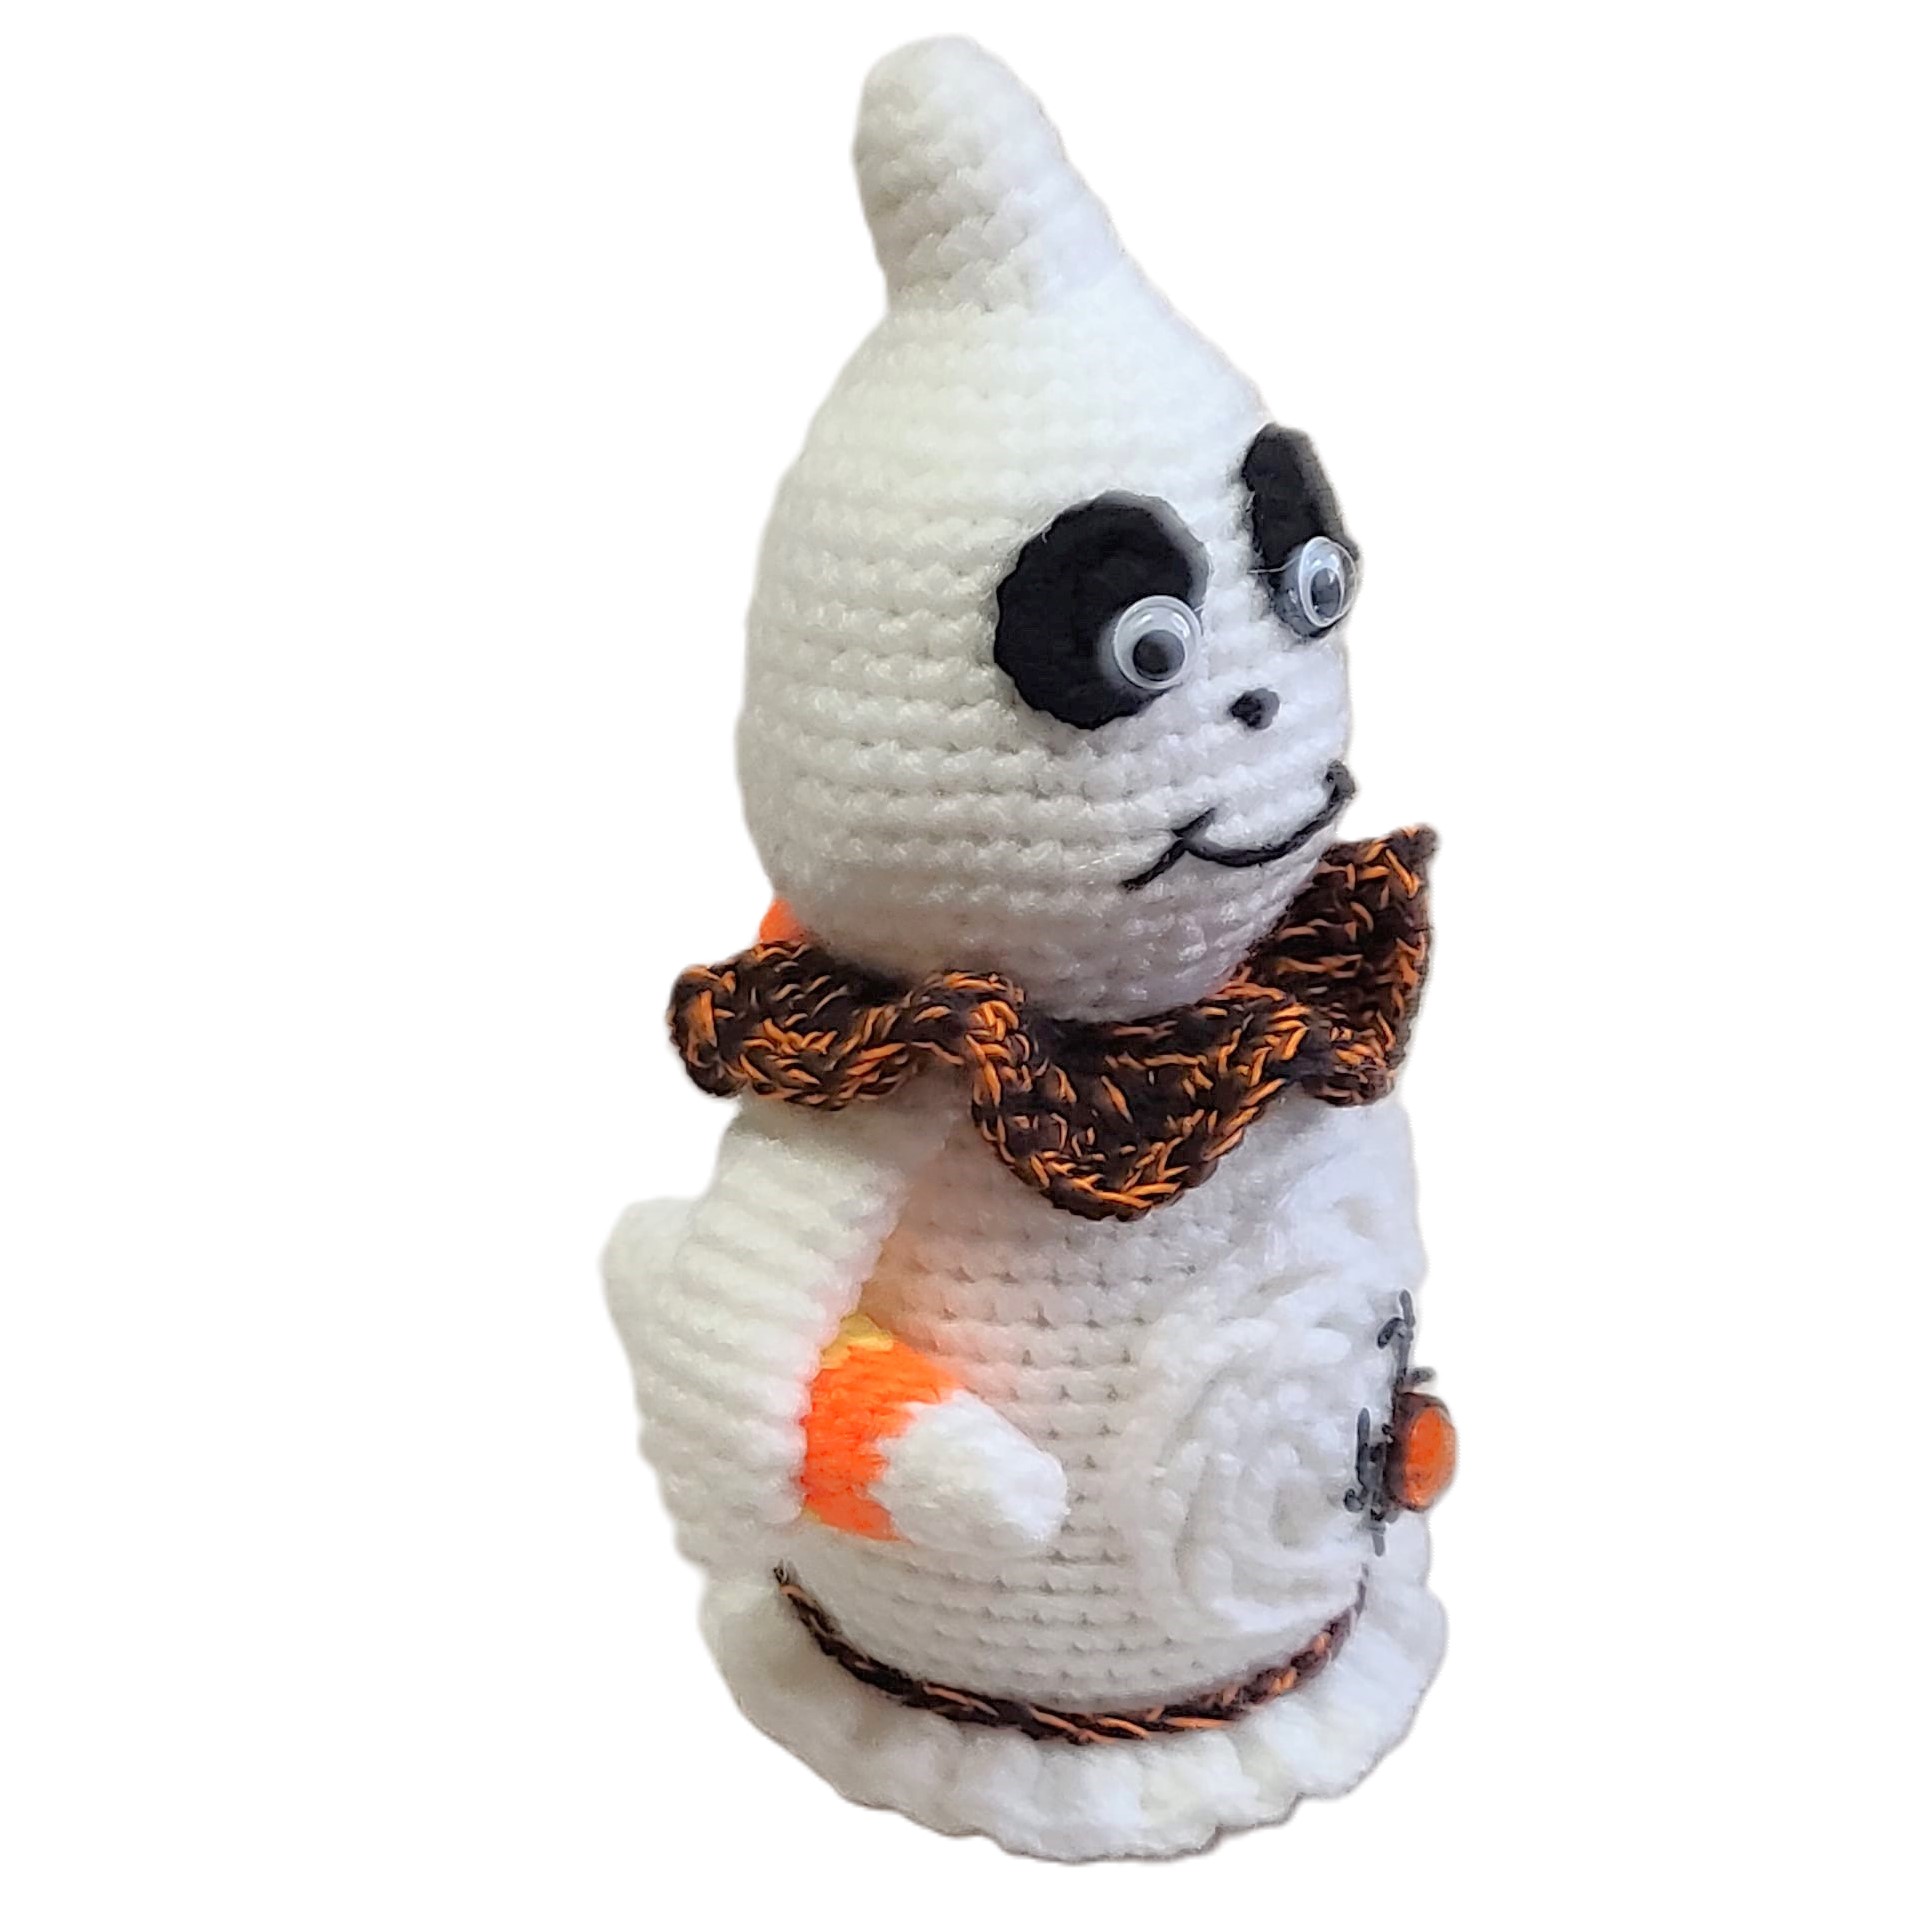 Crochet amigurumi handmade ghost